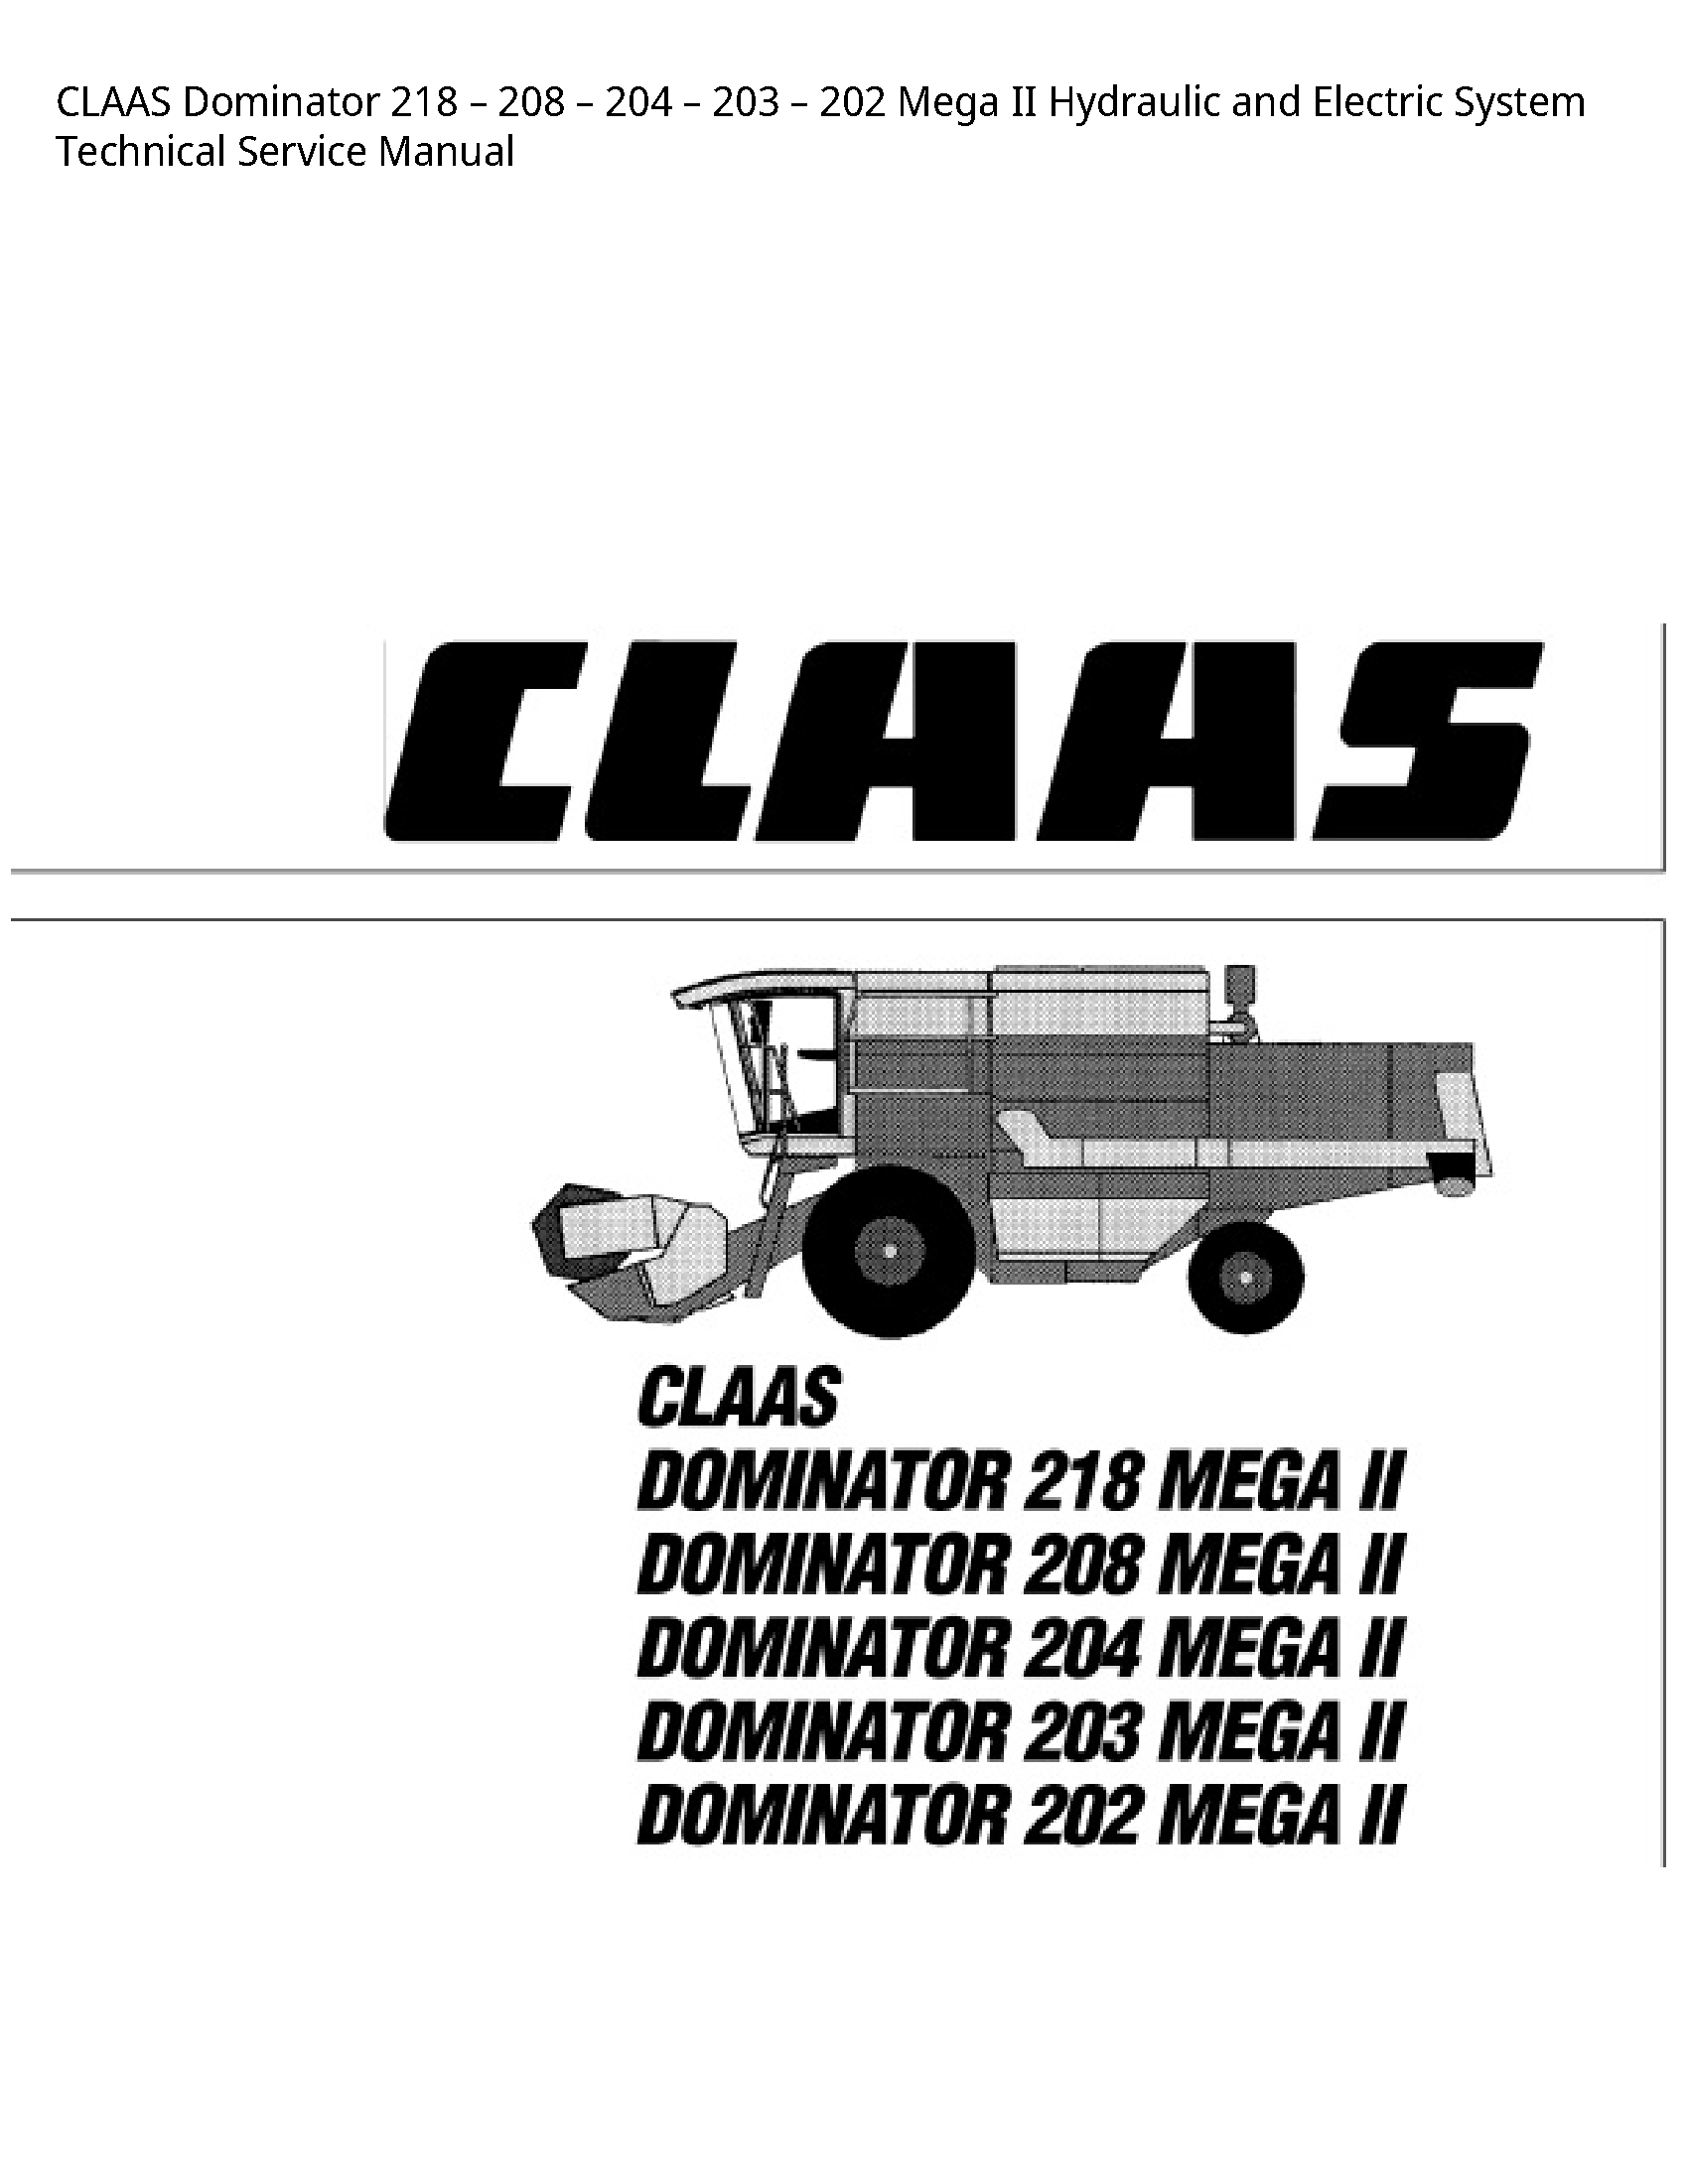 Claas 218 Dominator Mega II Hydraulic  Electric System Technical Service manual